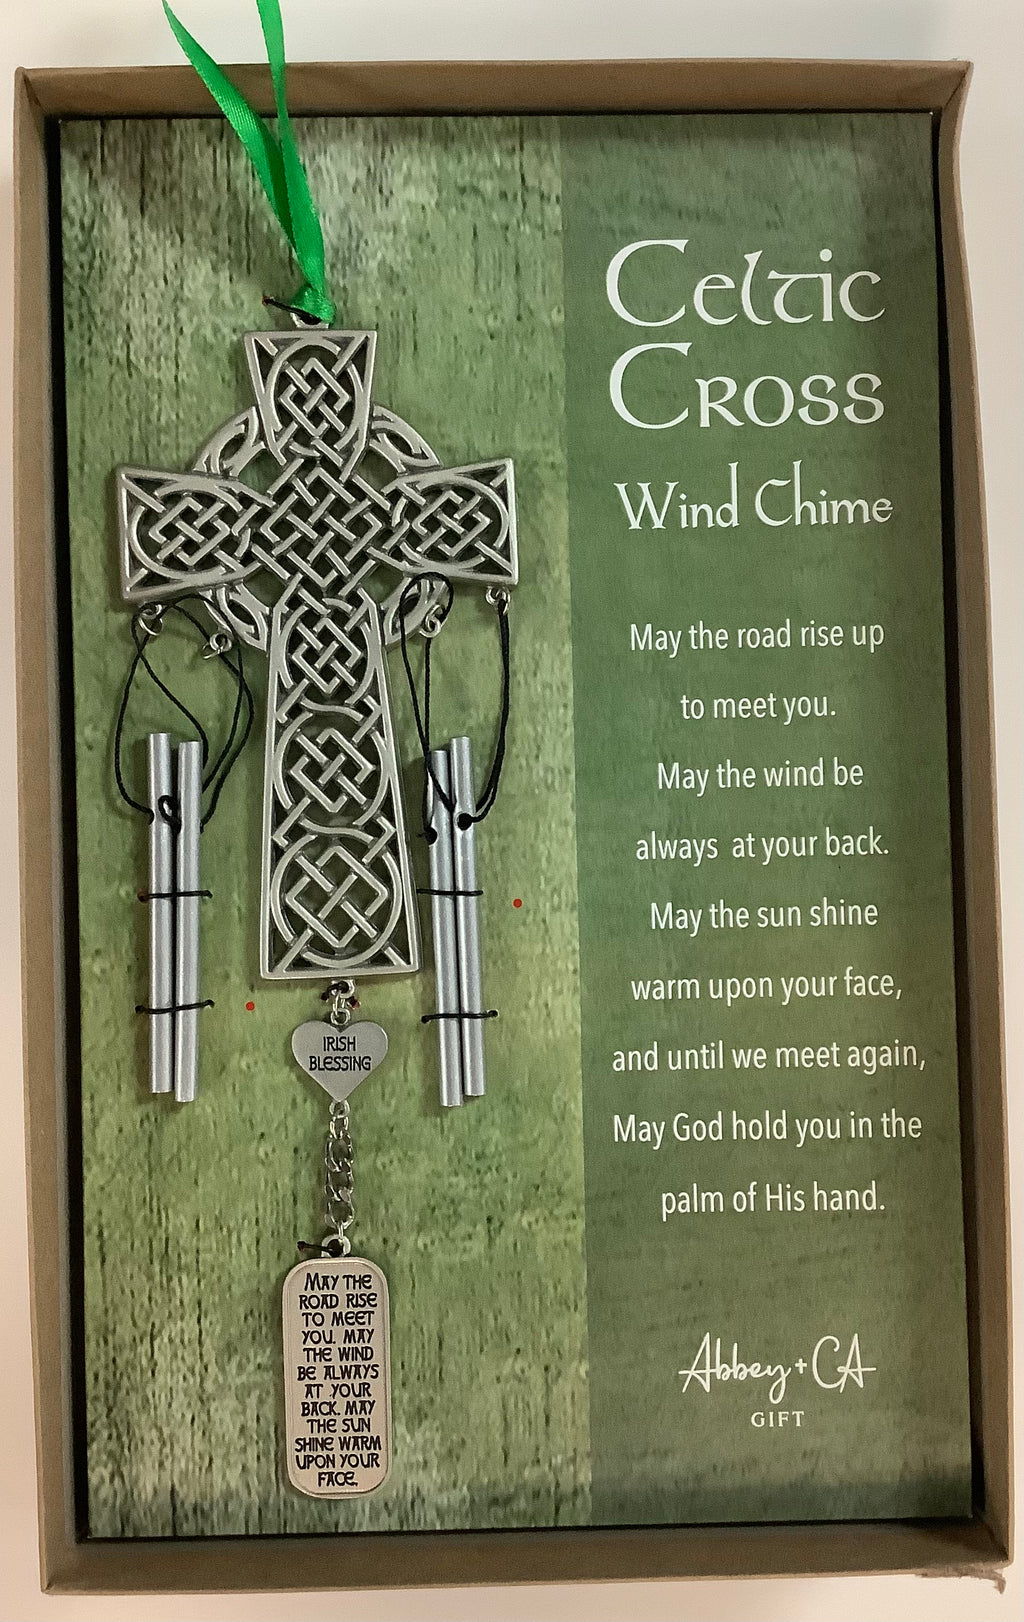 Celtic Cross Wind Chime